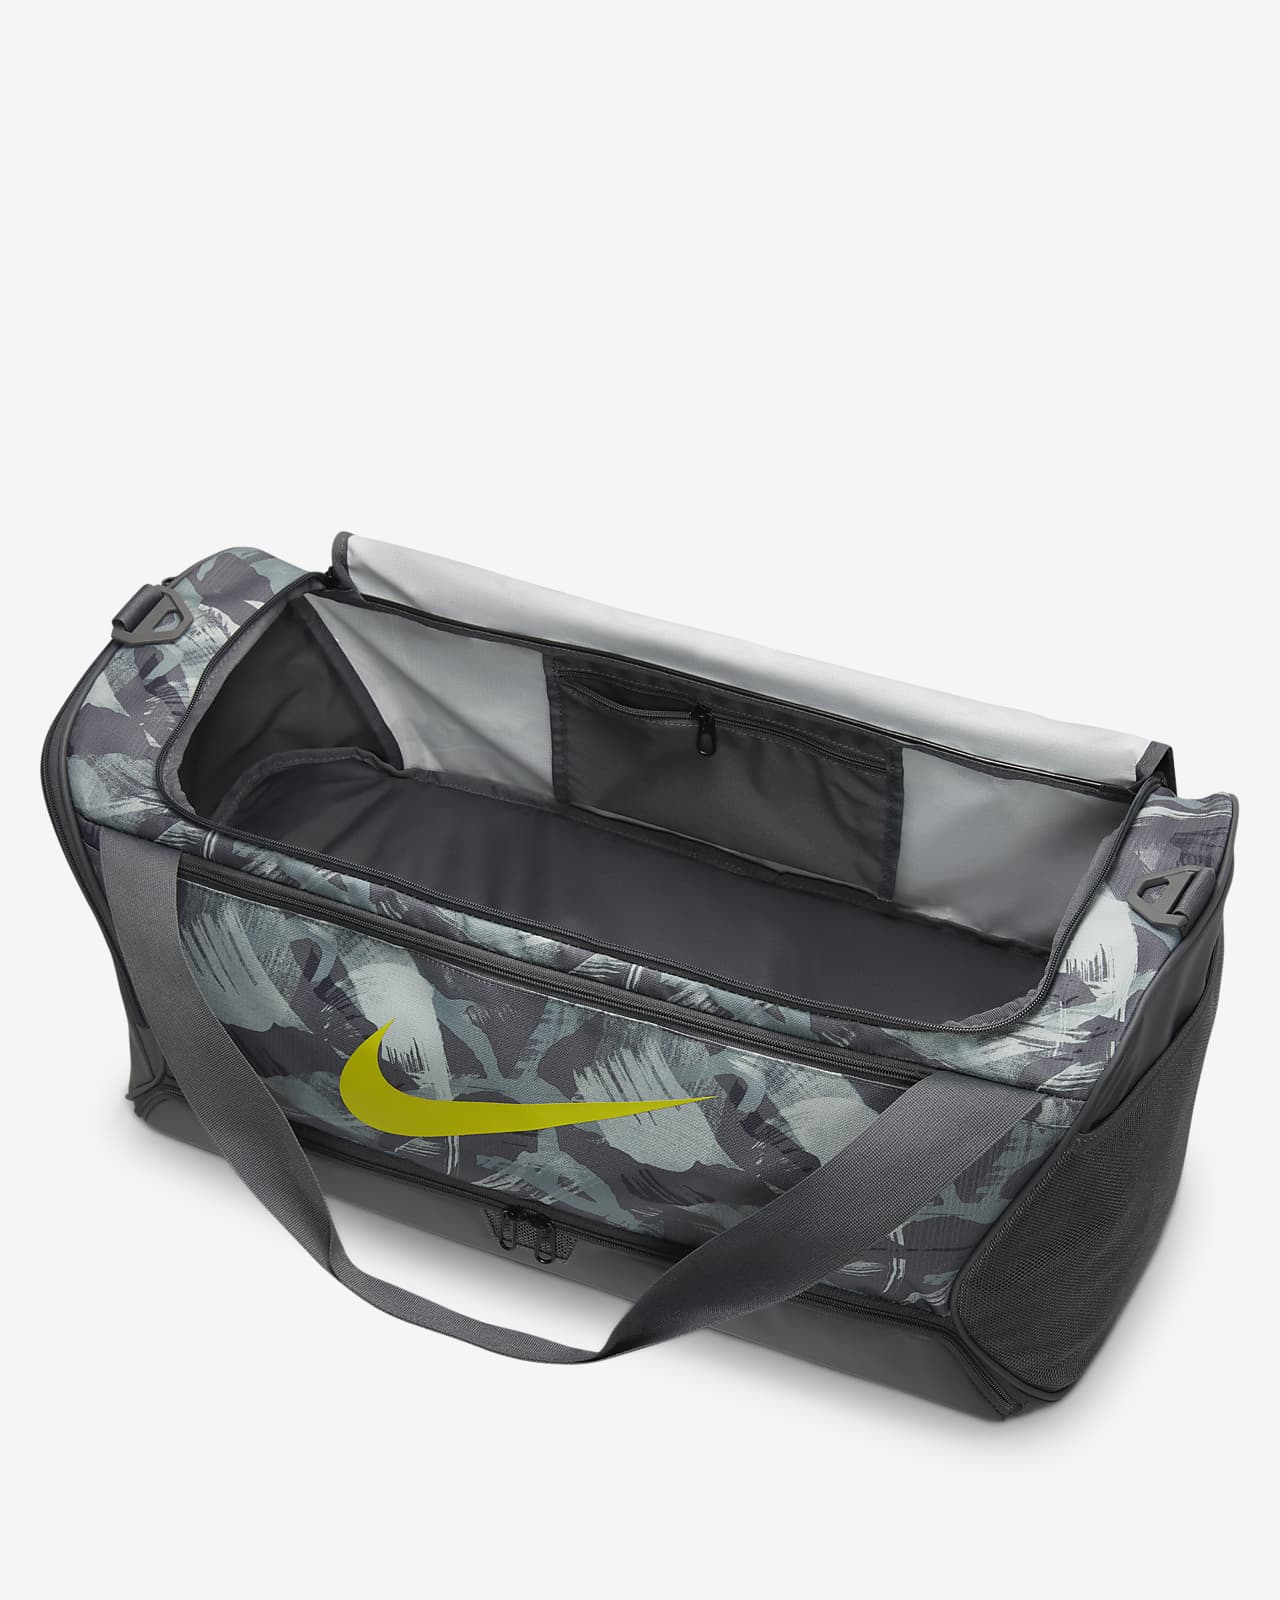 Nike Brasilia 6 Graphic Camo Medium Duffel Bag Anthracite/Black/White 